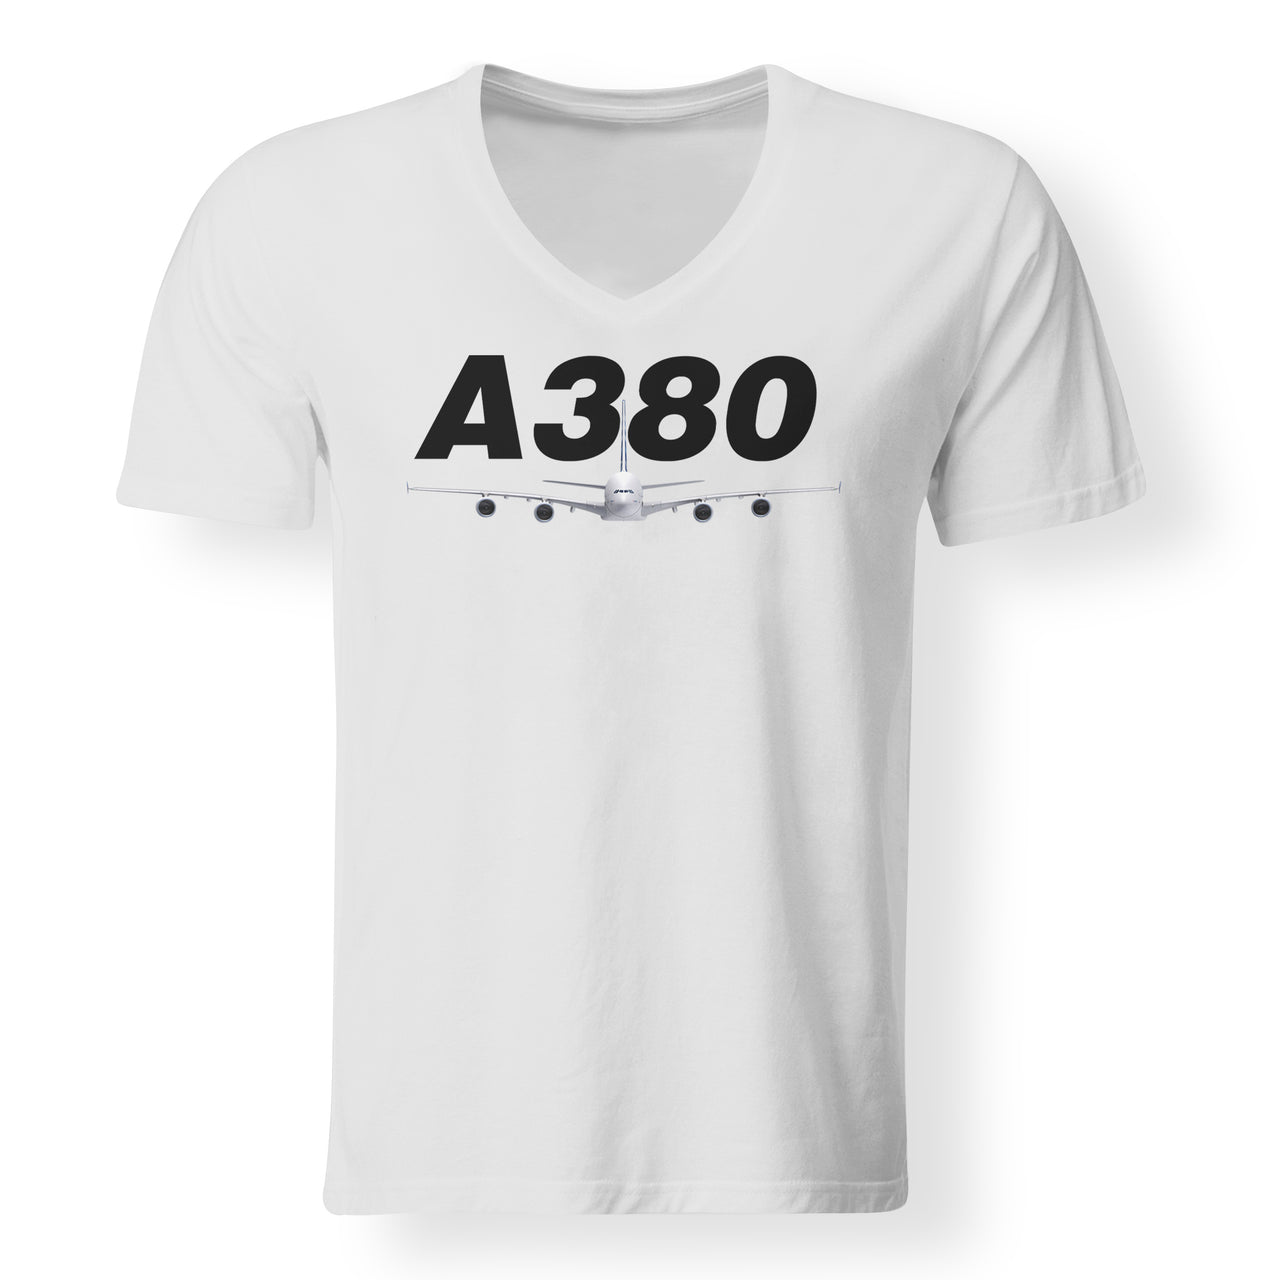 Super Airbus A380 Designed V-Neck T-Shirts